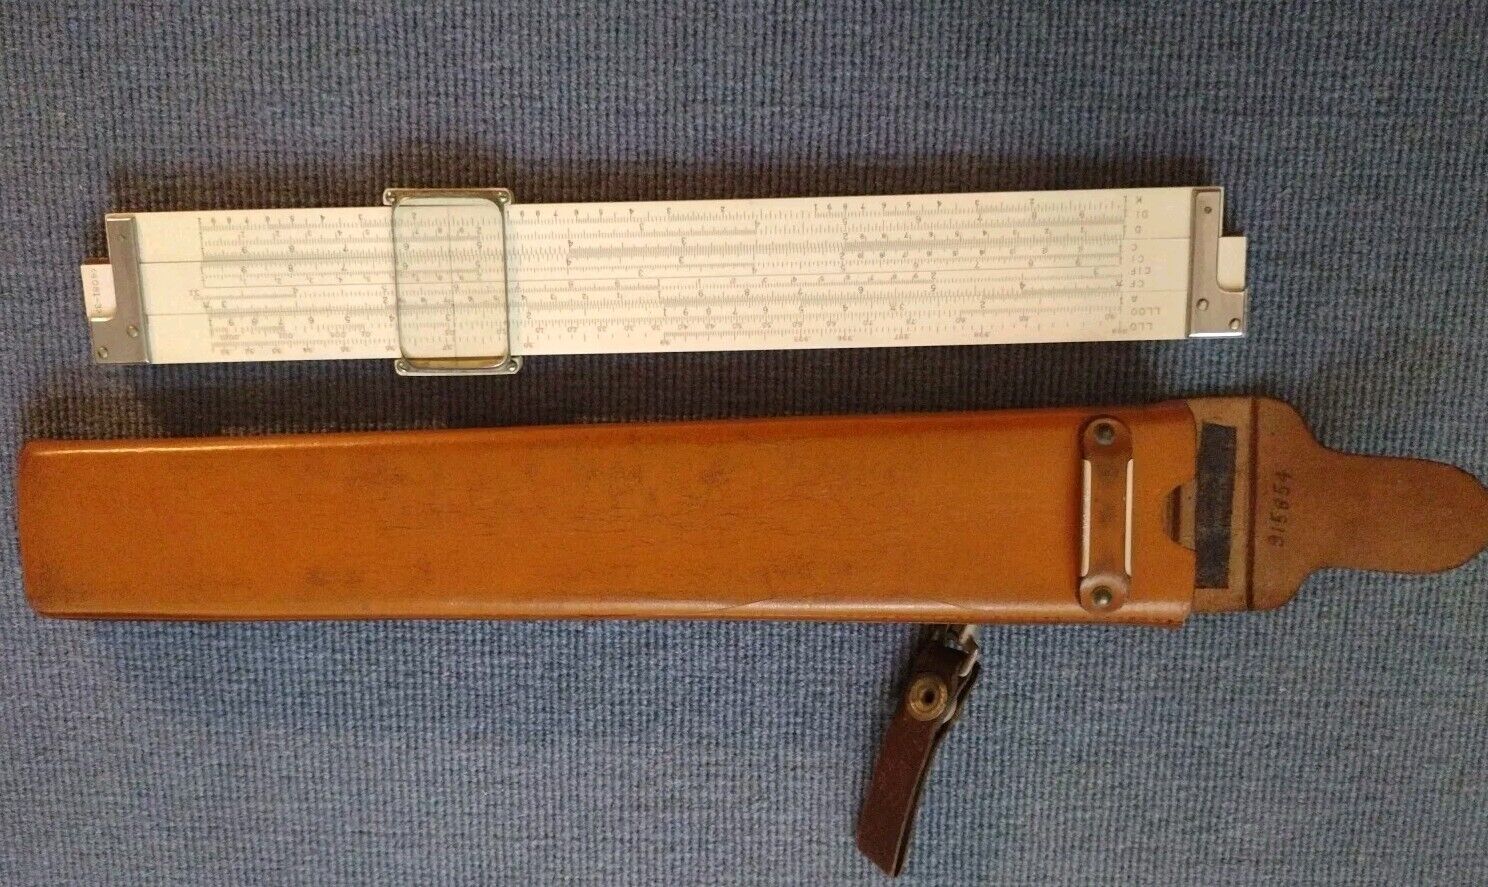 VINTAGE KEUFFEL & ESSER CO. N.Y.Slide Ruler 4081-3 With Leather Case Made in USA